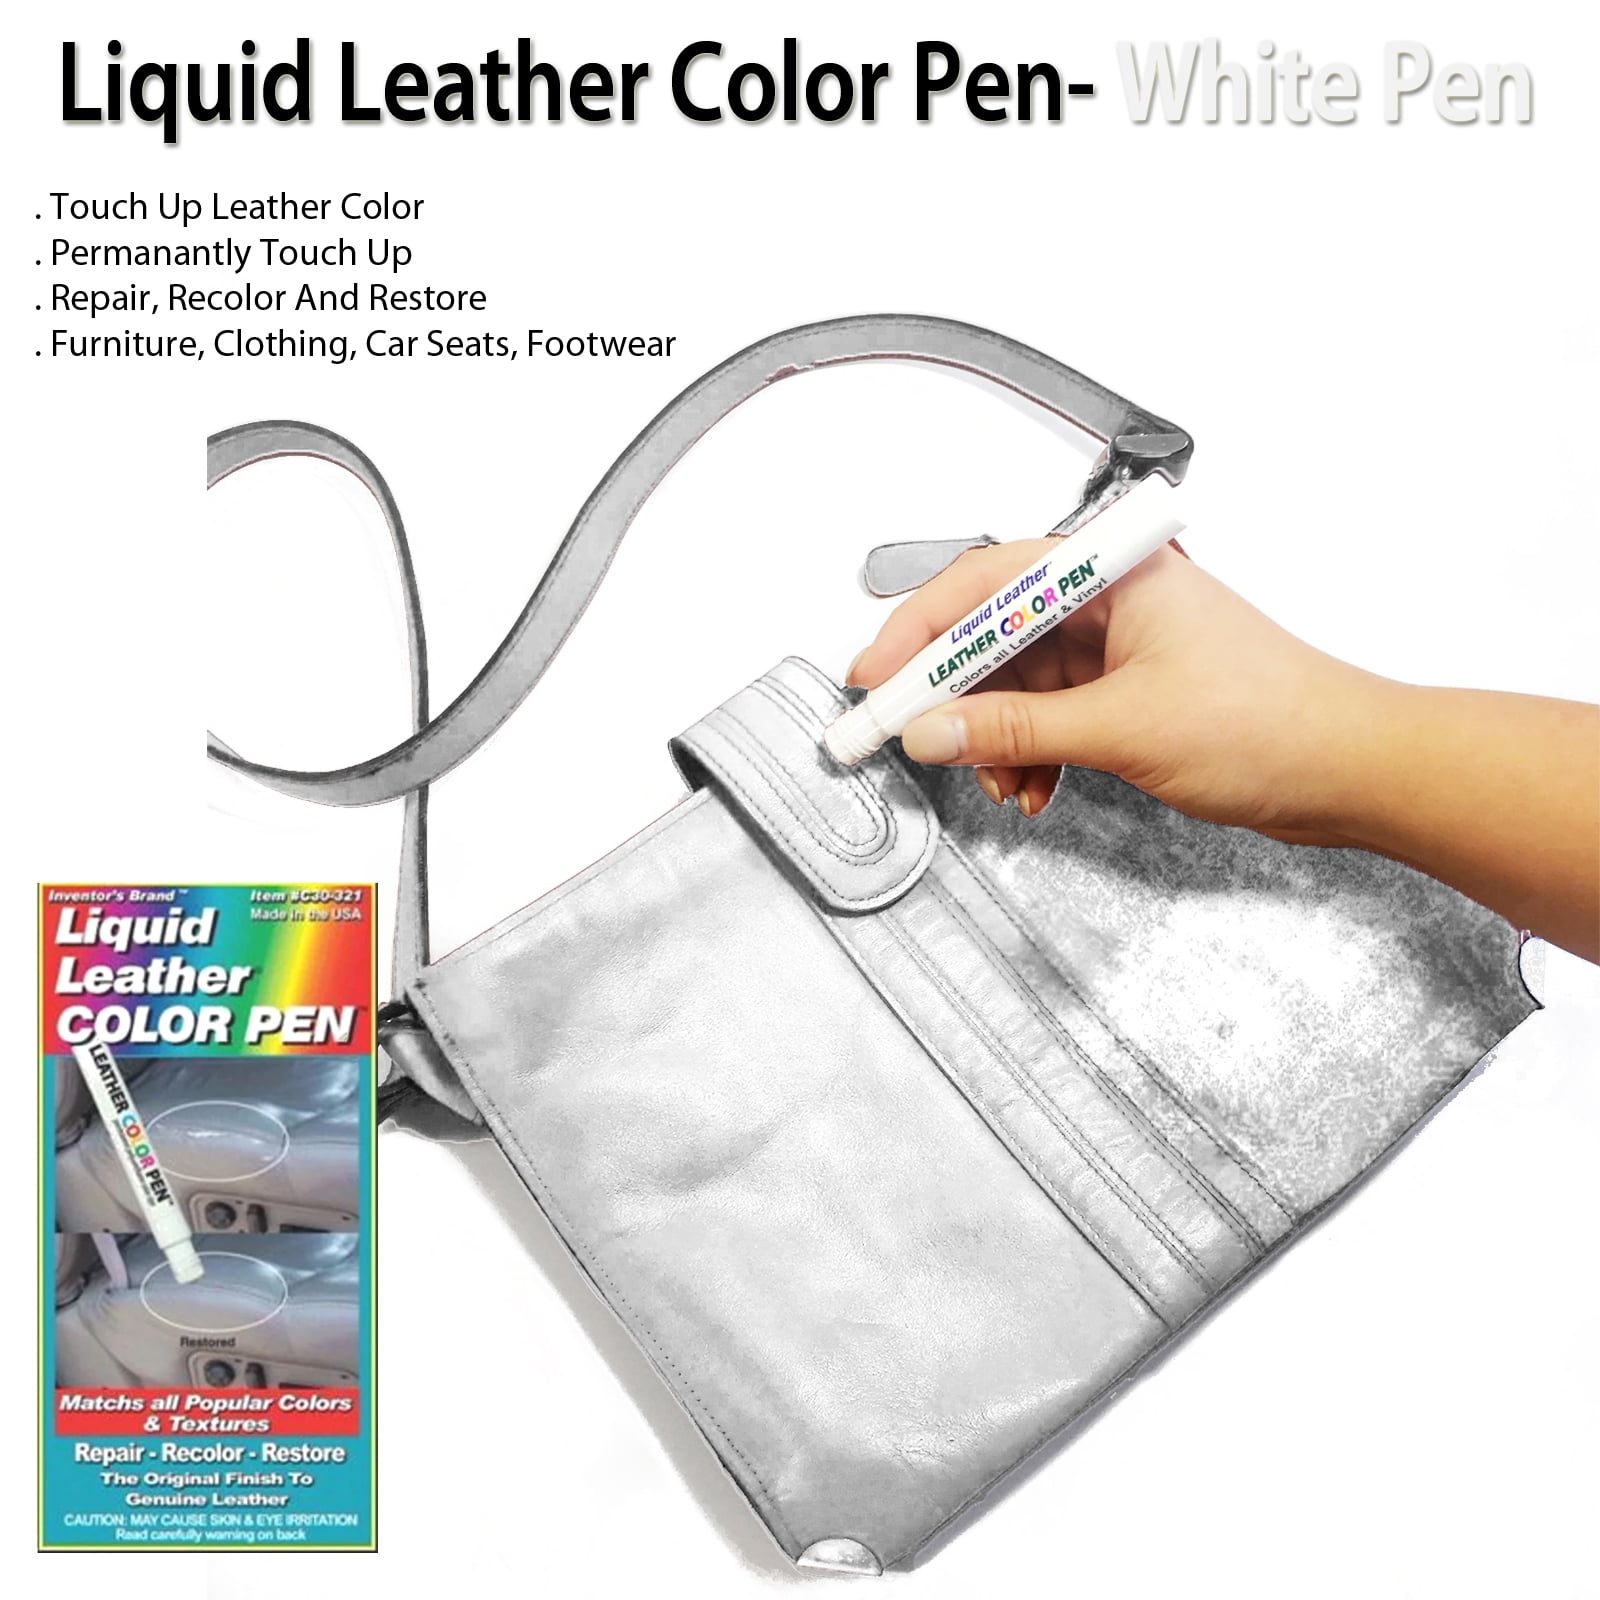 Liquid Leather Liquid Leather Color Pen- White Pen White 